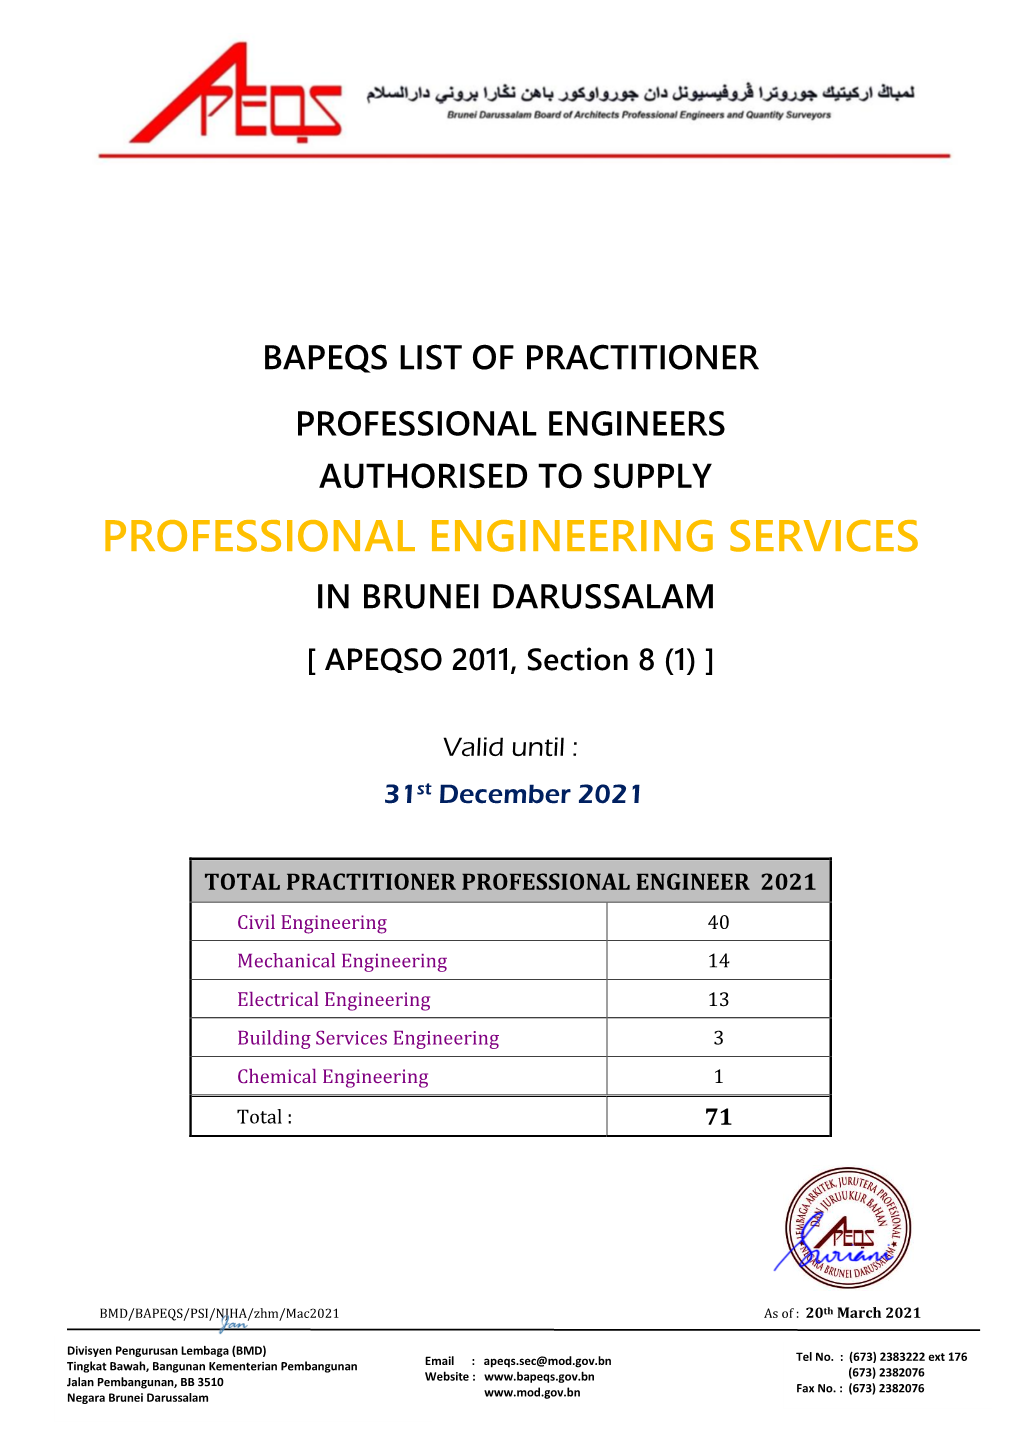 BAPEQS List PC Professional Engineer Doc 03-2021 As of 20